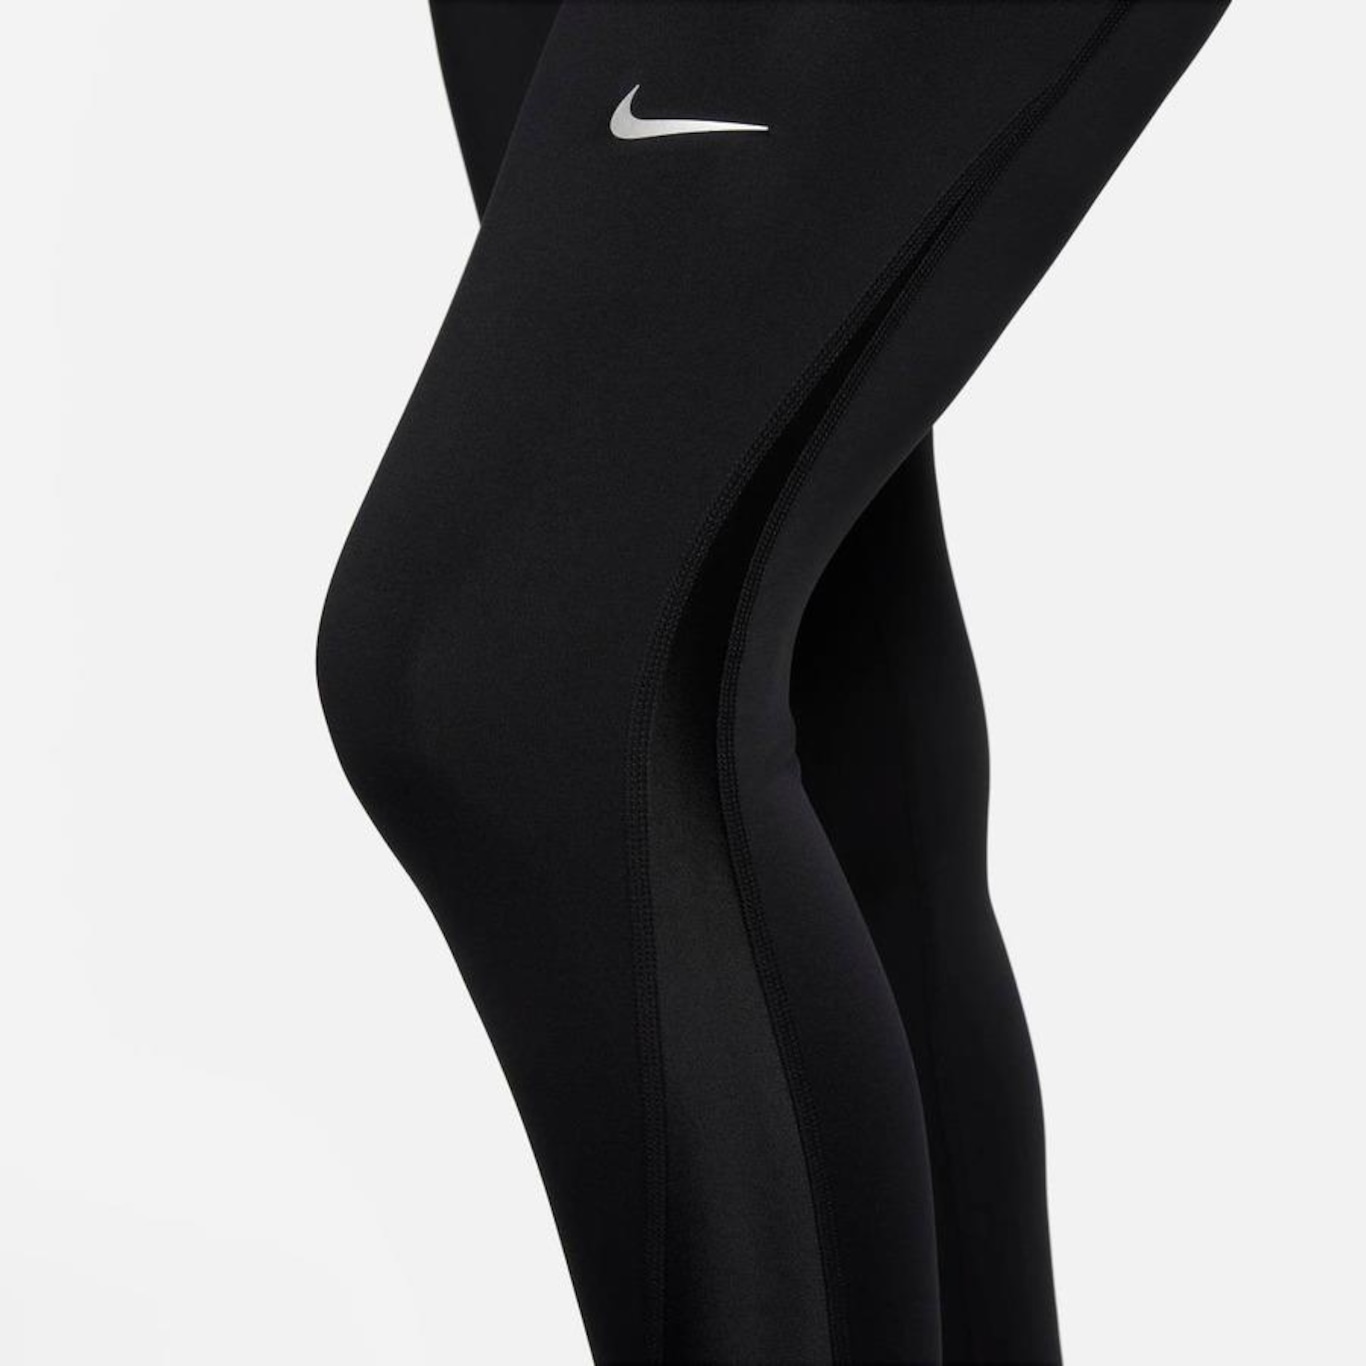 Legging Nike Pro Preto Feminina